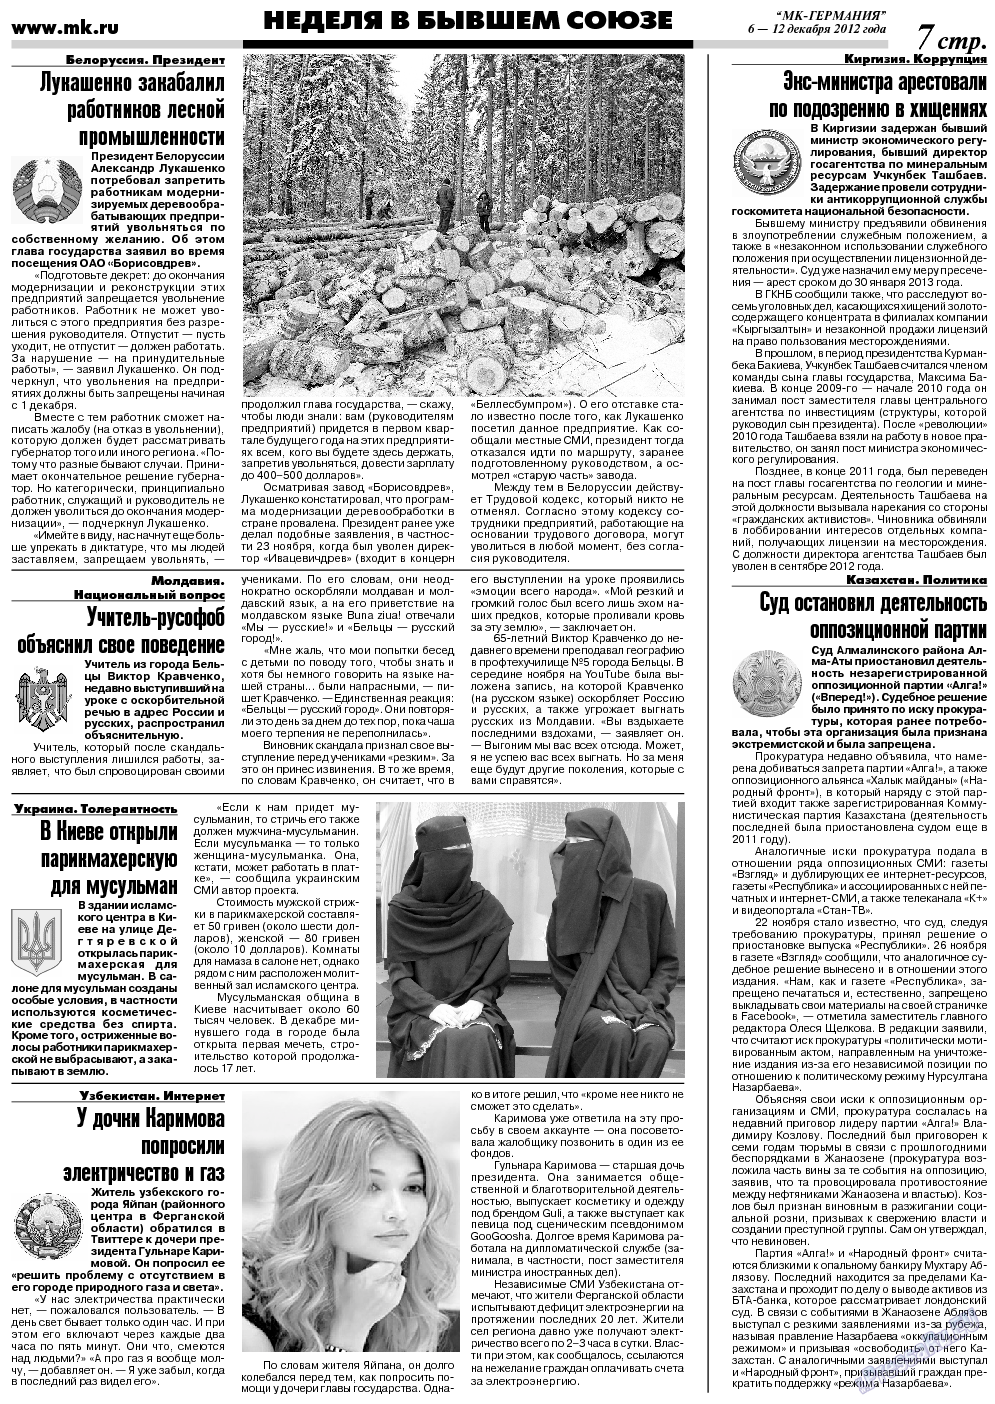 МК-Германия, газета. 2012 №49 стр.7